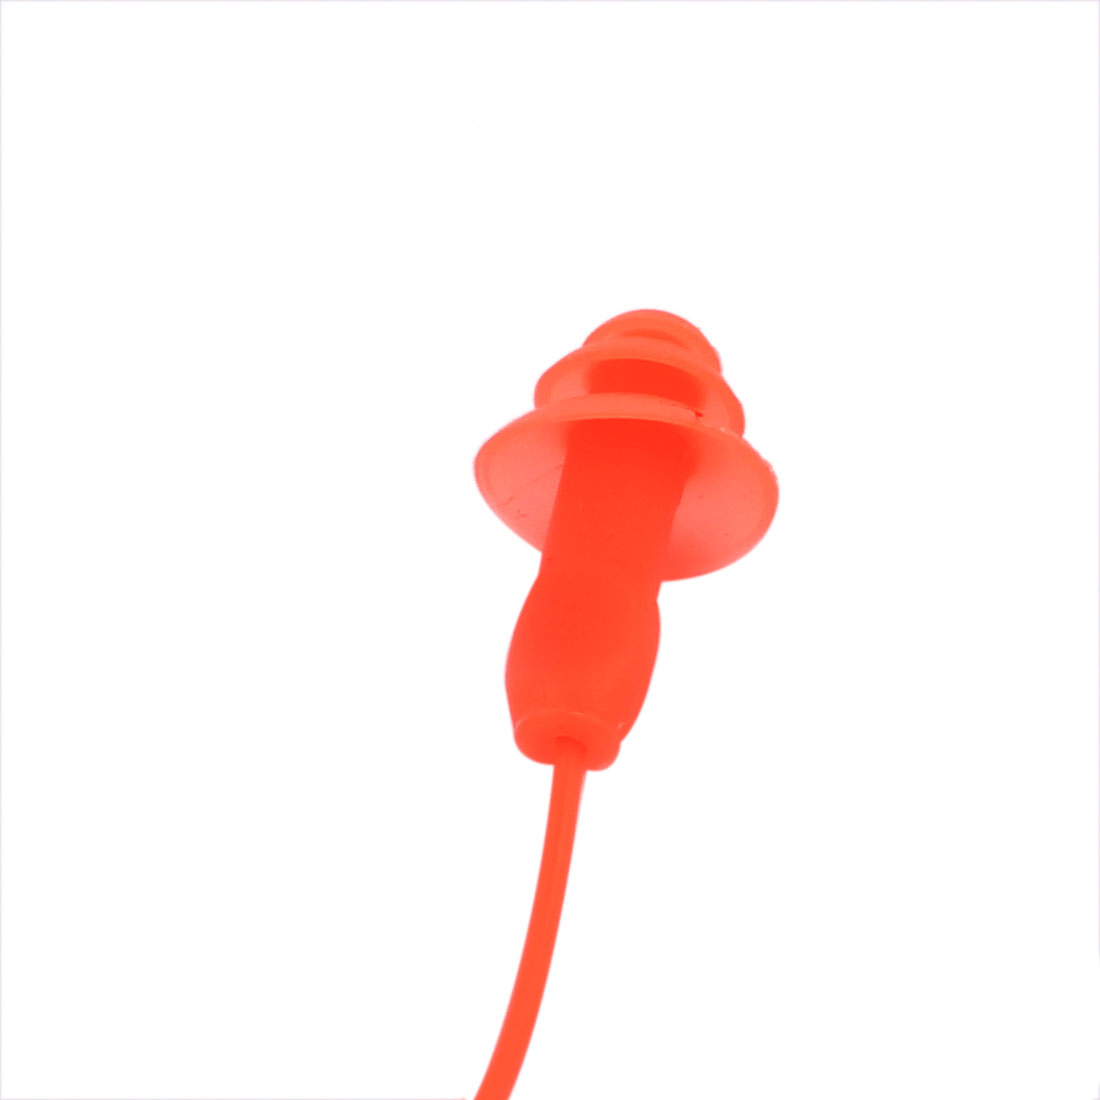 Unique Bargains Soft Silicone Swimming String Earplug Ear Plugs Protector Orange 2pcs